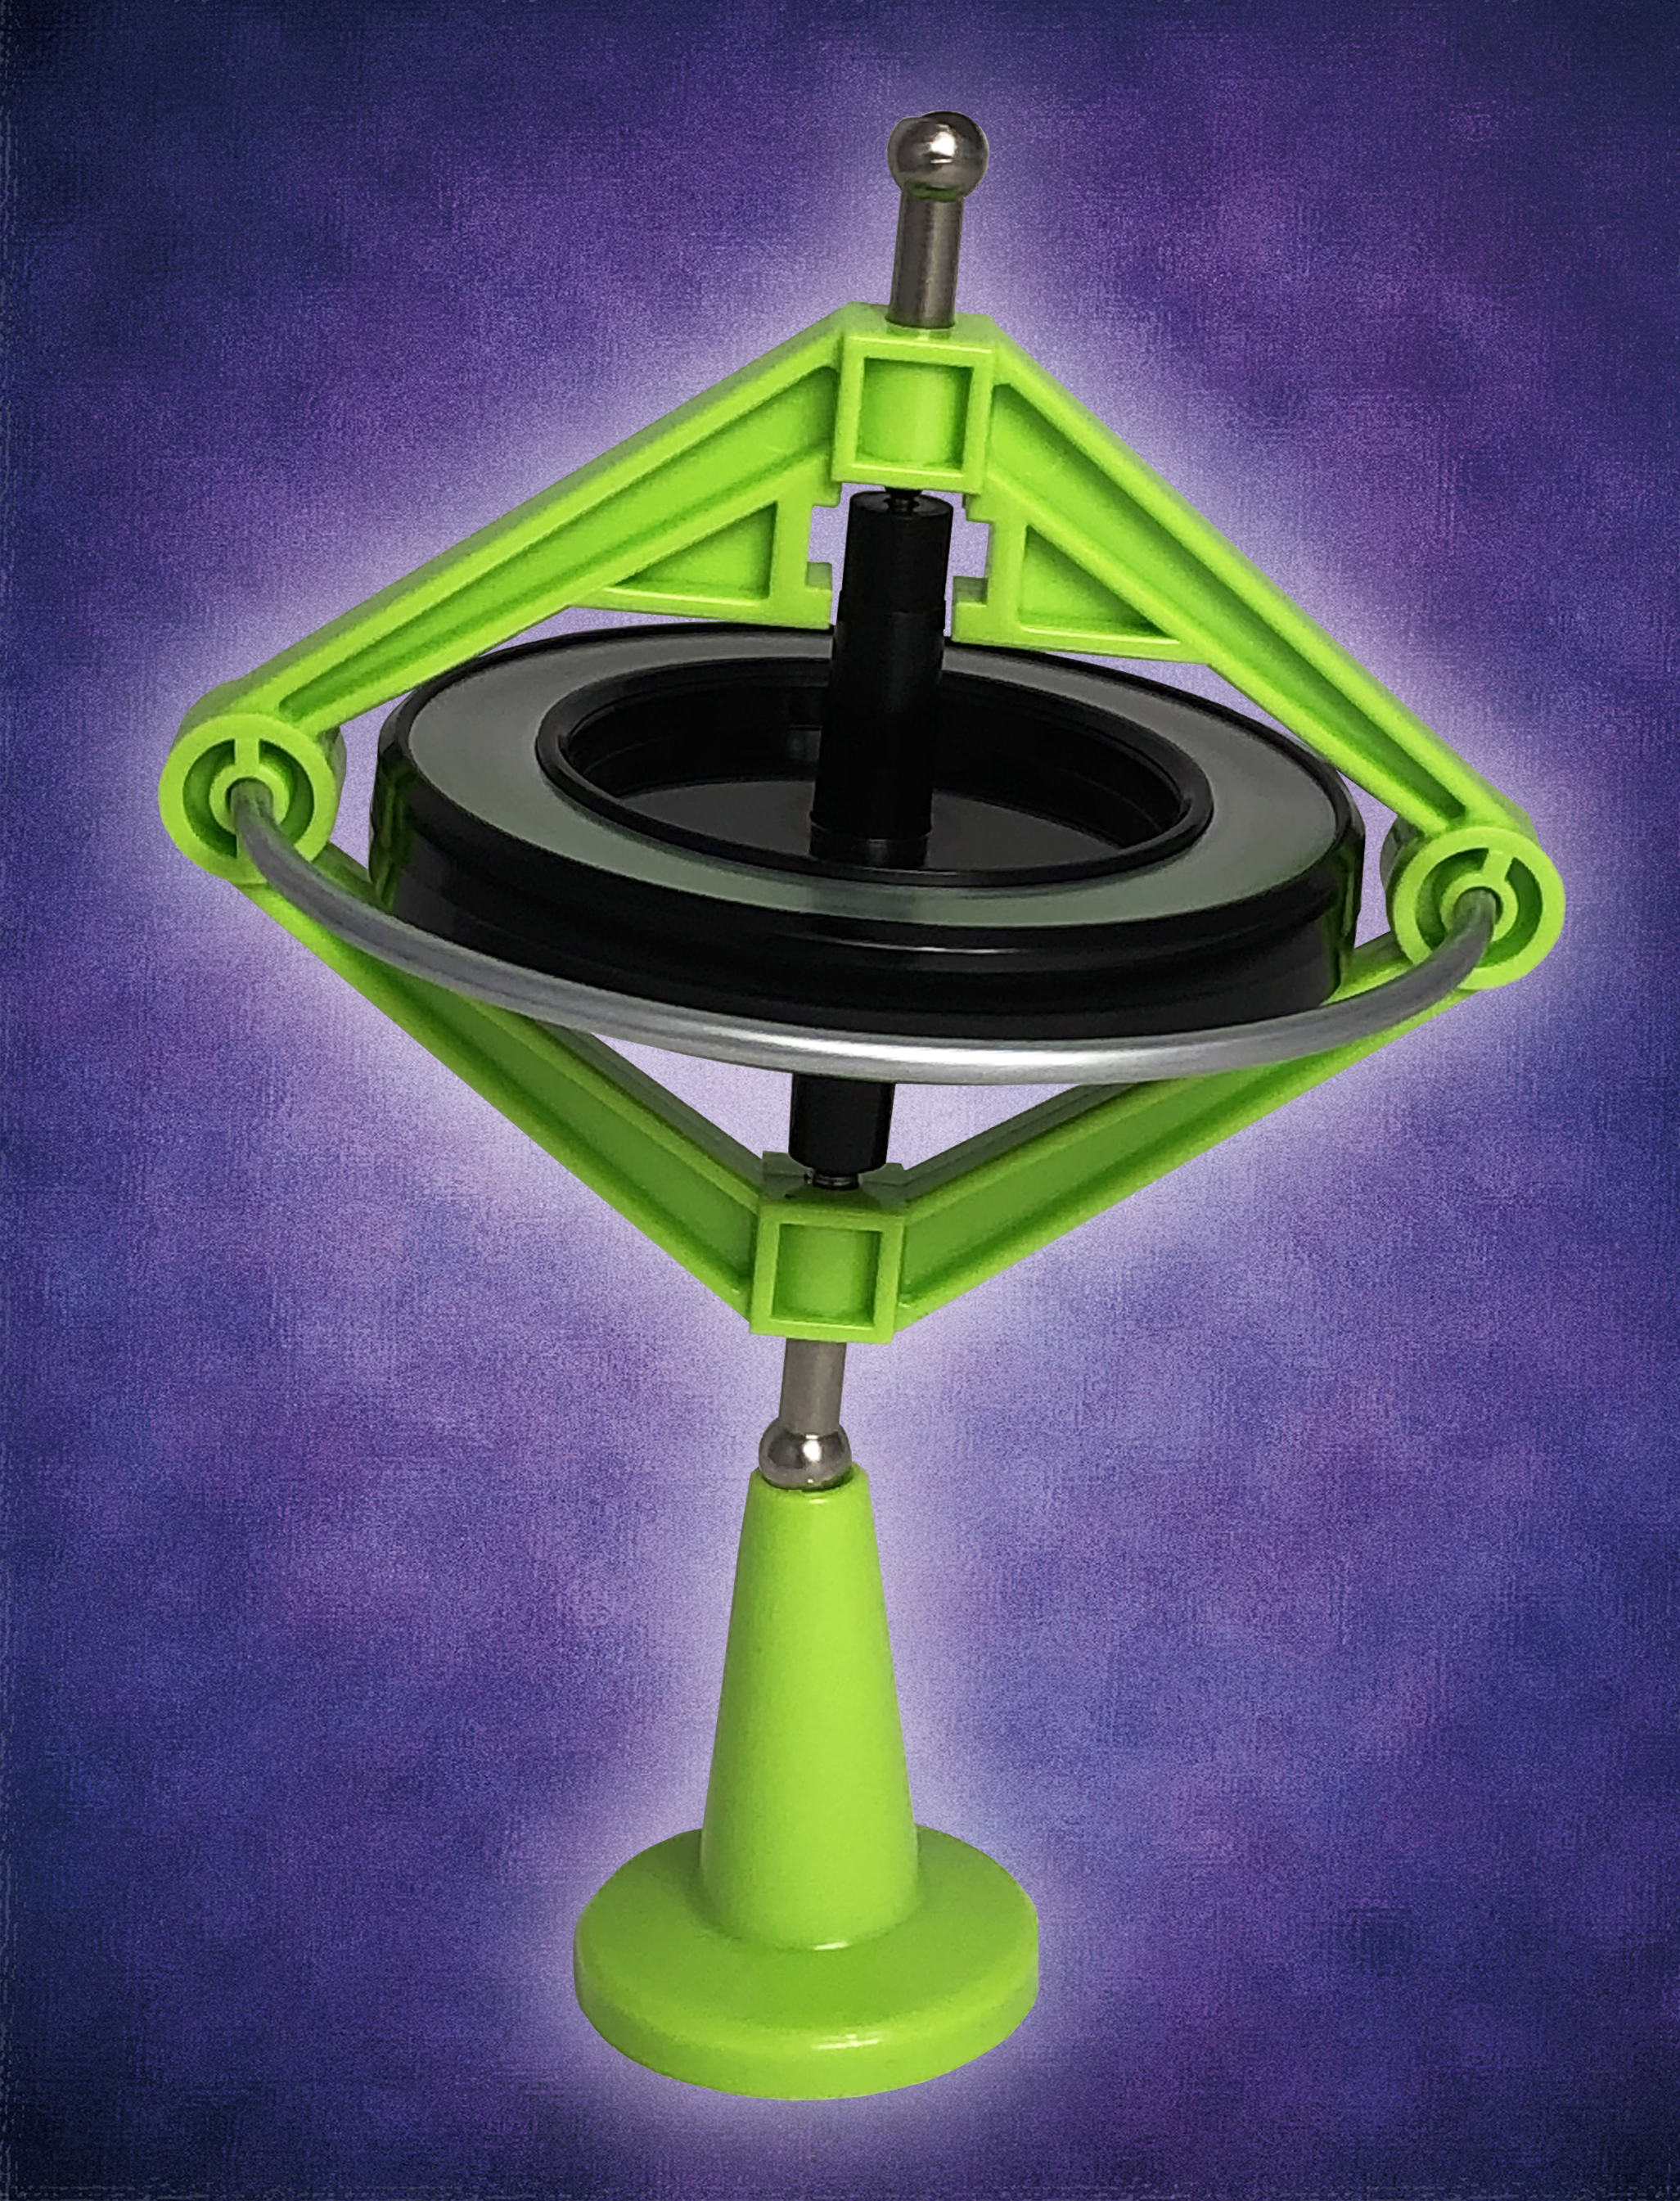 Explorastore product Gyroscope with purple background